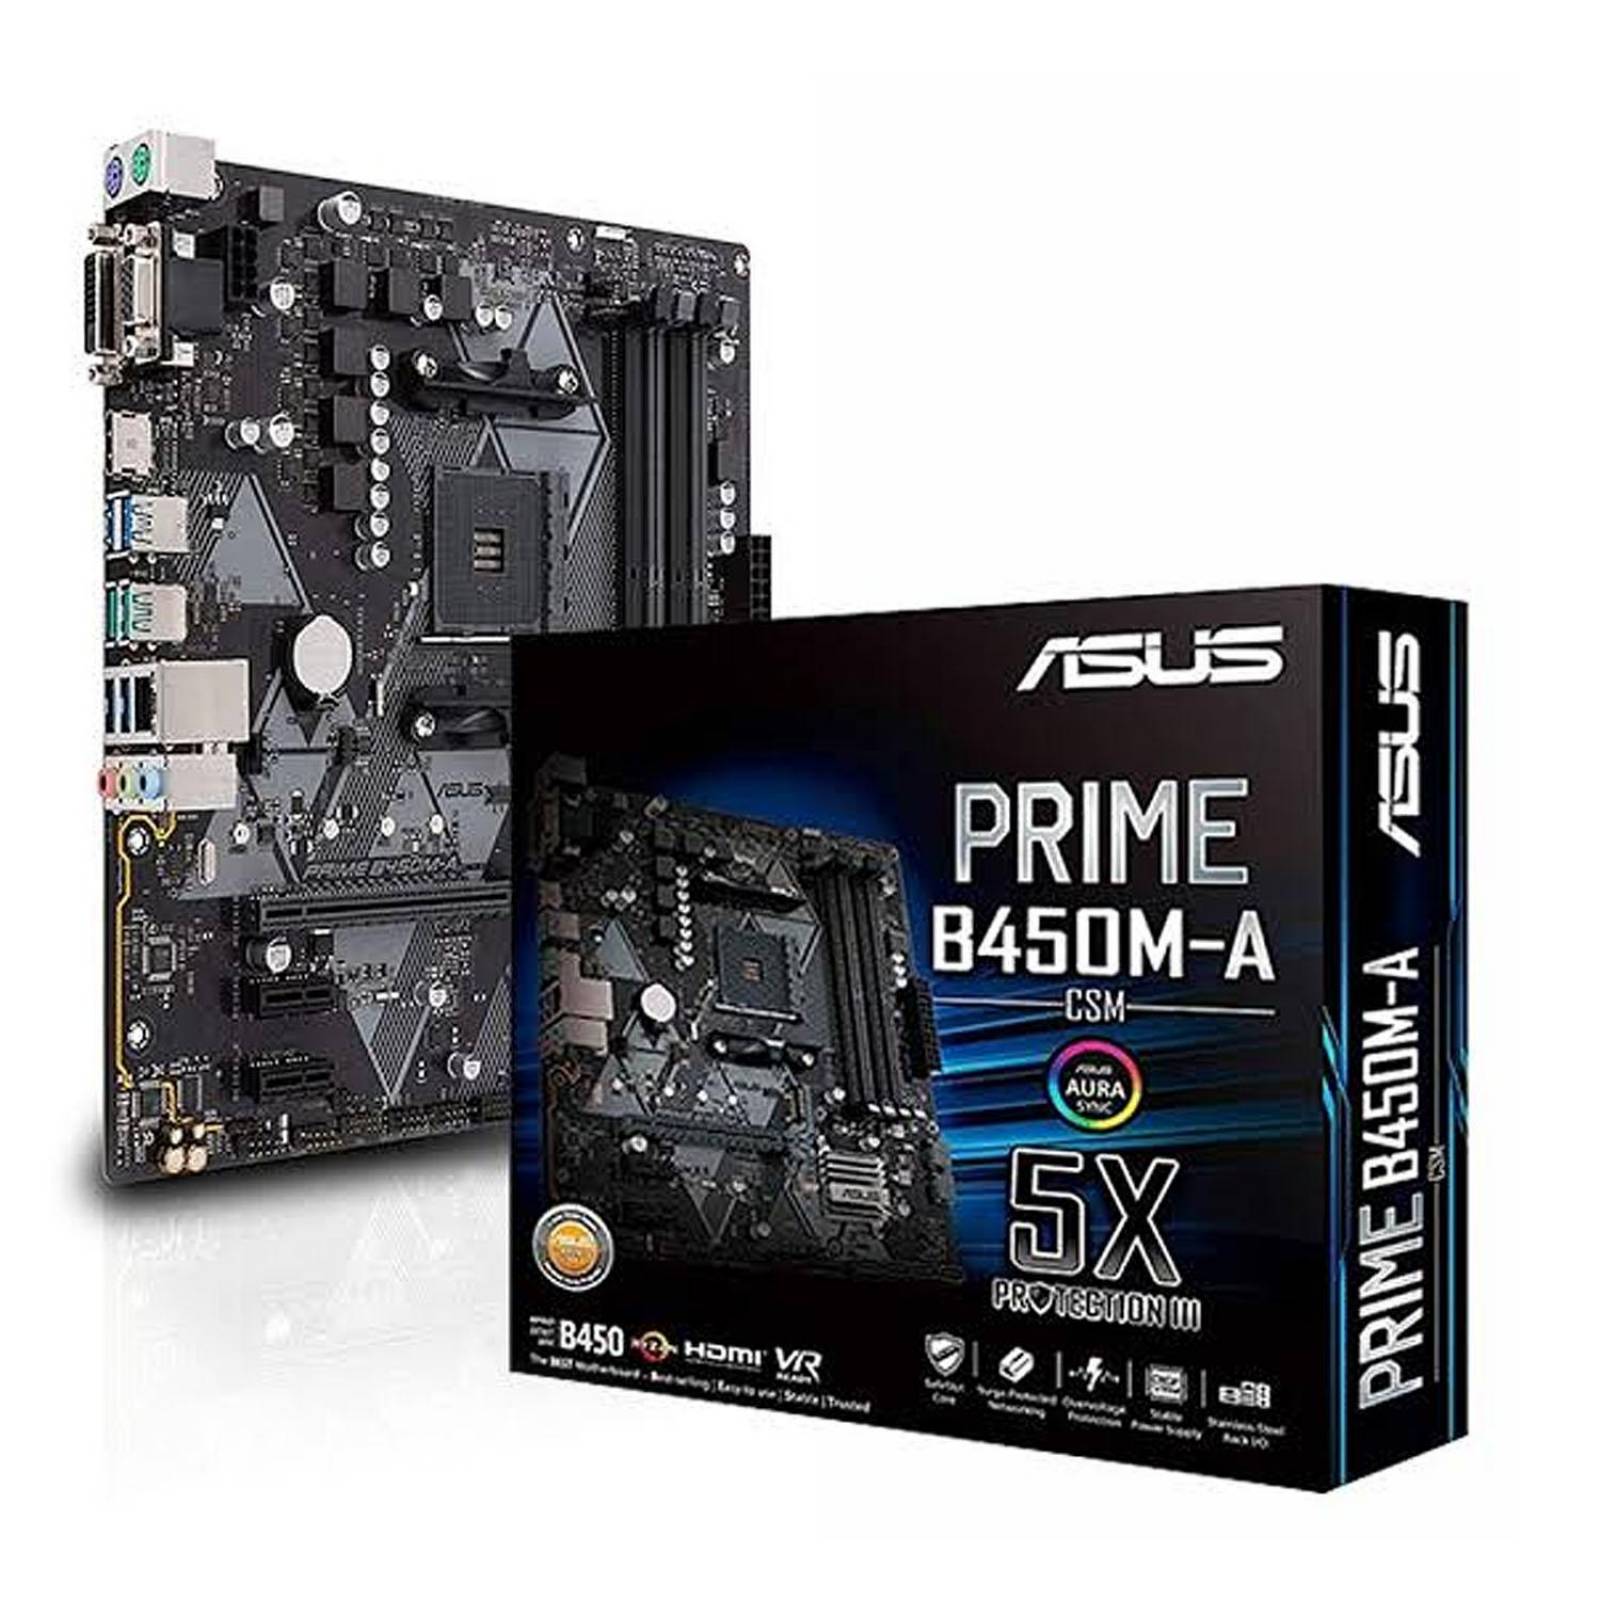 Pc Gamer Xtreme Amd Ryzen 5 3400G Ram 8Gb Unidad SSD 240Gb Graficos Radeon Vega 11 